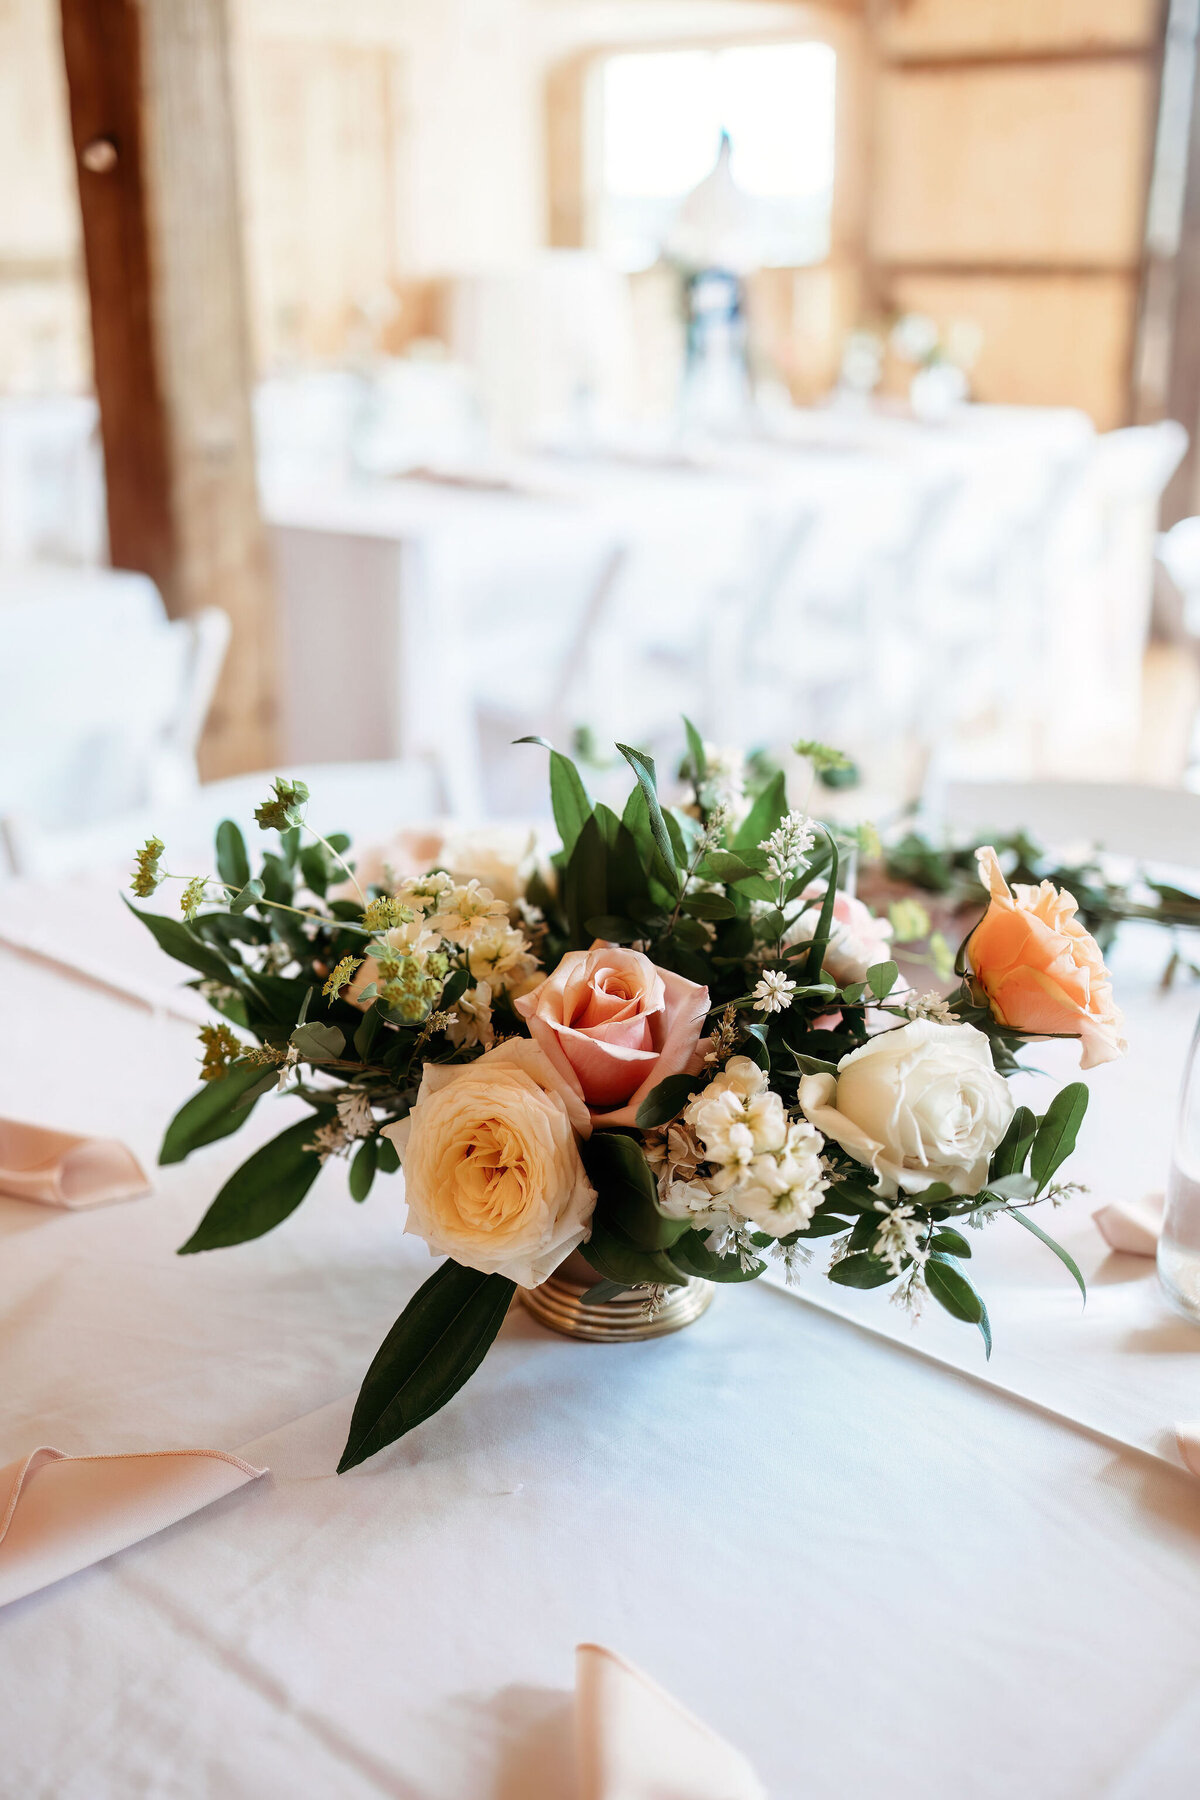 raymond-farm-new-hartford-ct-barn-wedding-flowers-centerpieces-tableware-rentals-petals-plates-26